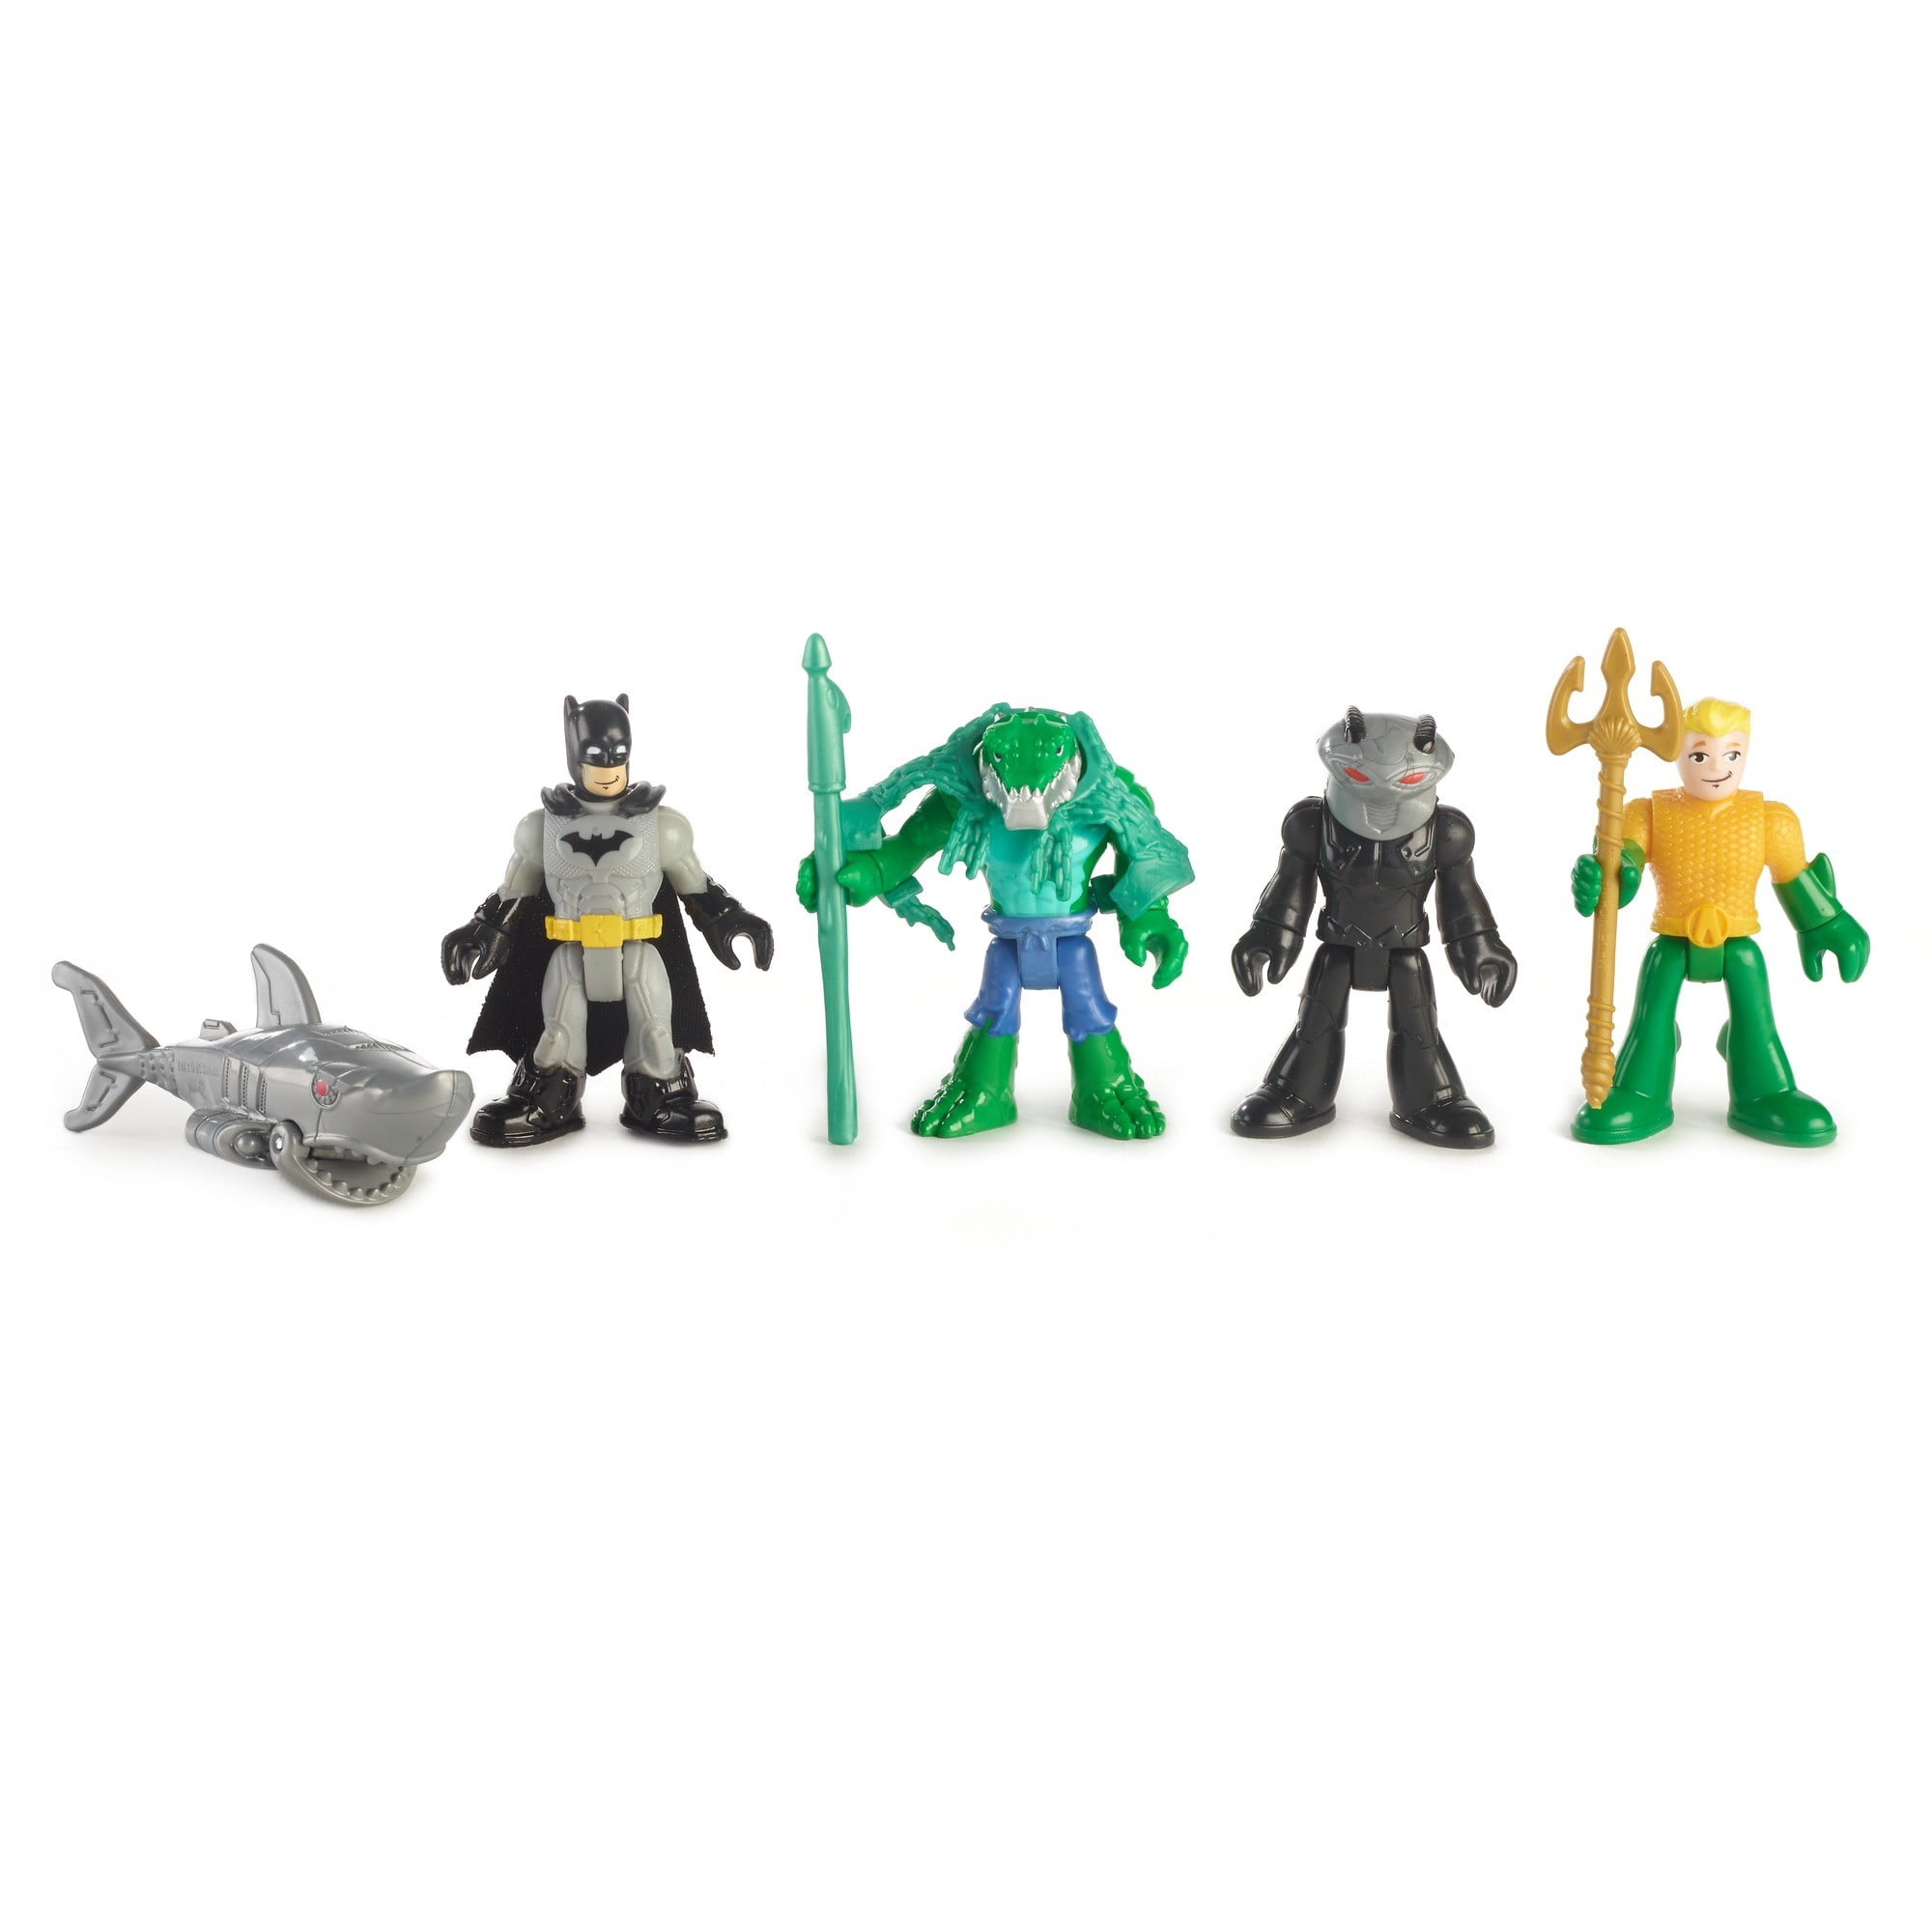 Imaginext DC Super Friends Aquaman Playset HUGE Saving for sale online 